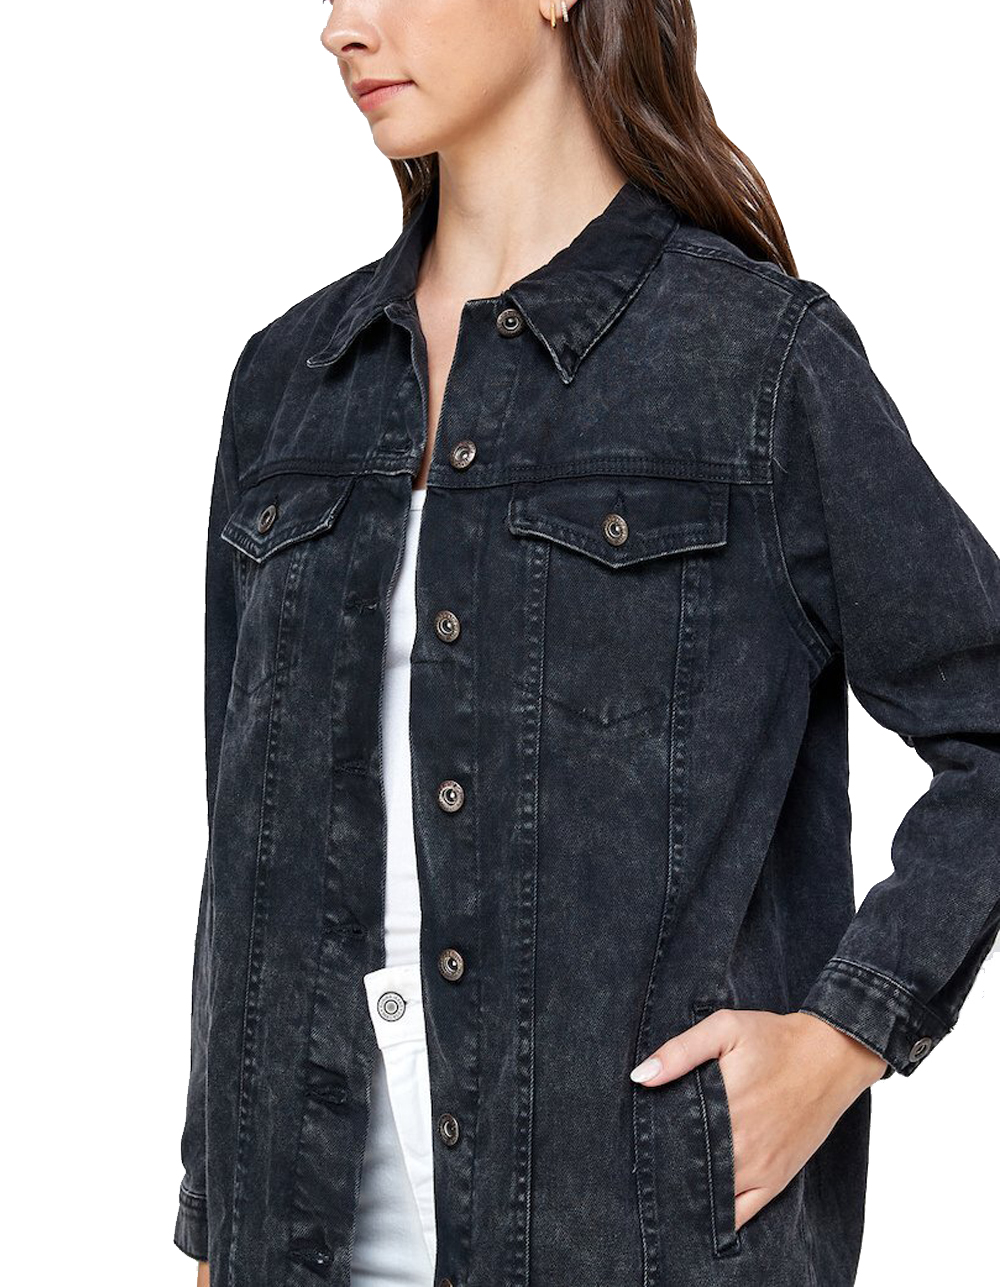 Women's Long Casual Maxi Length Denim Cotton Coat Oversize Button Up Jean Jacket (Mineral Black, S) - image 5 of 6